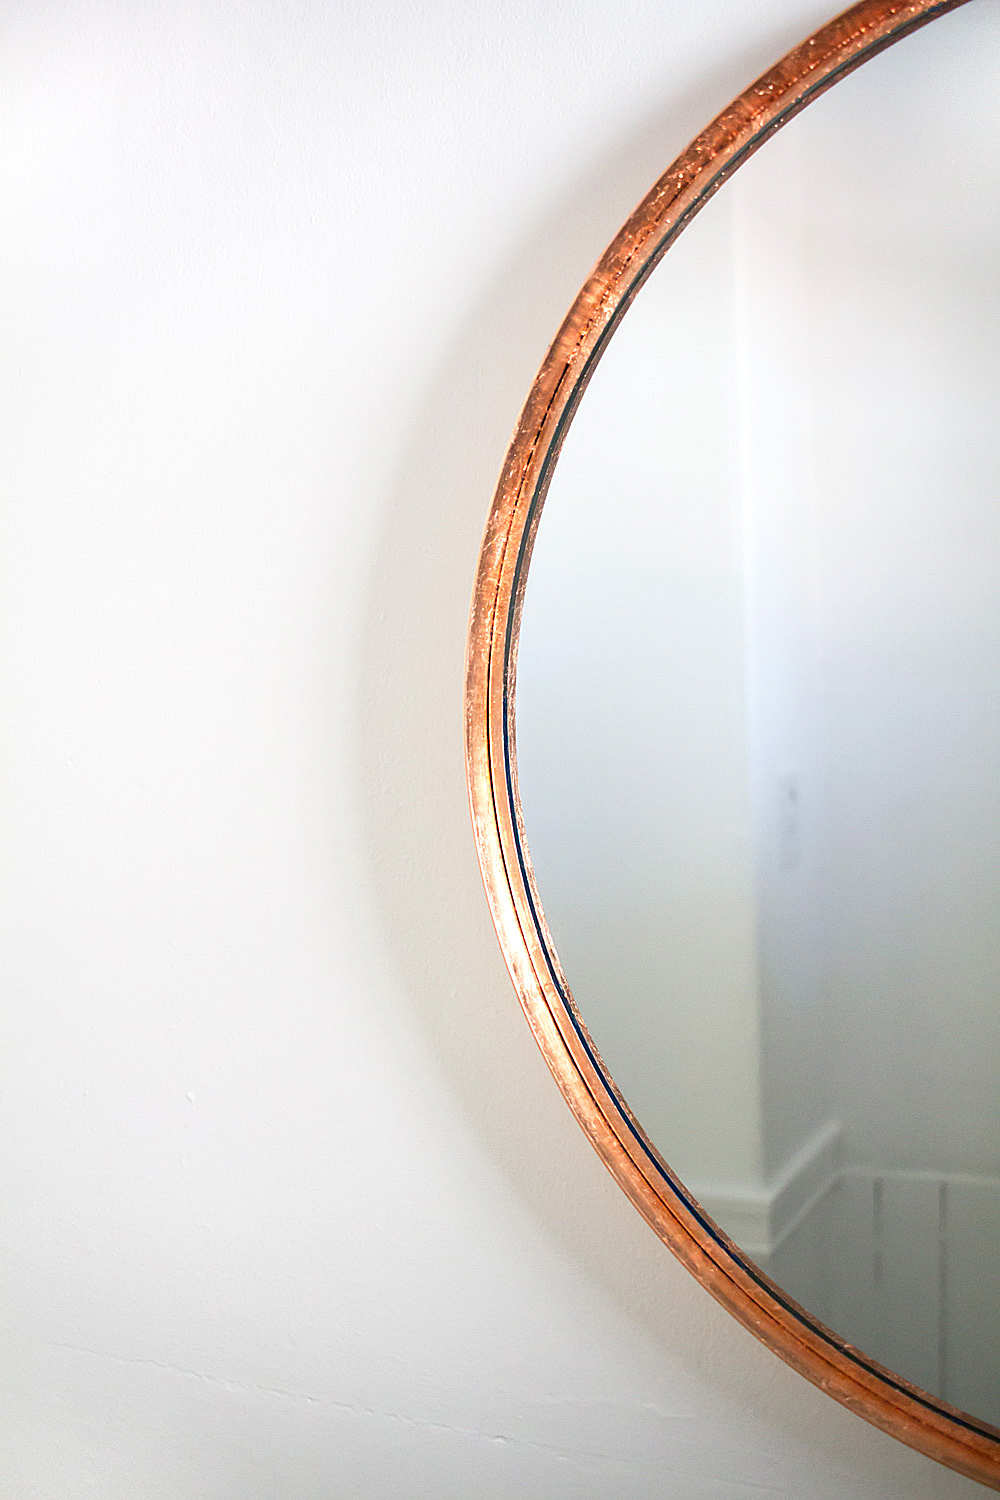 IKEA Hack: Make Your Own DIY Copper Mirror